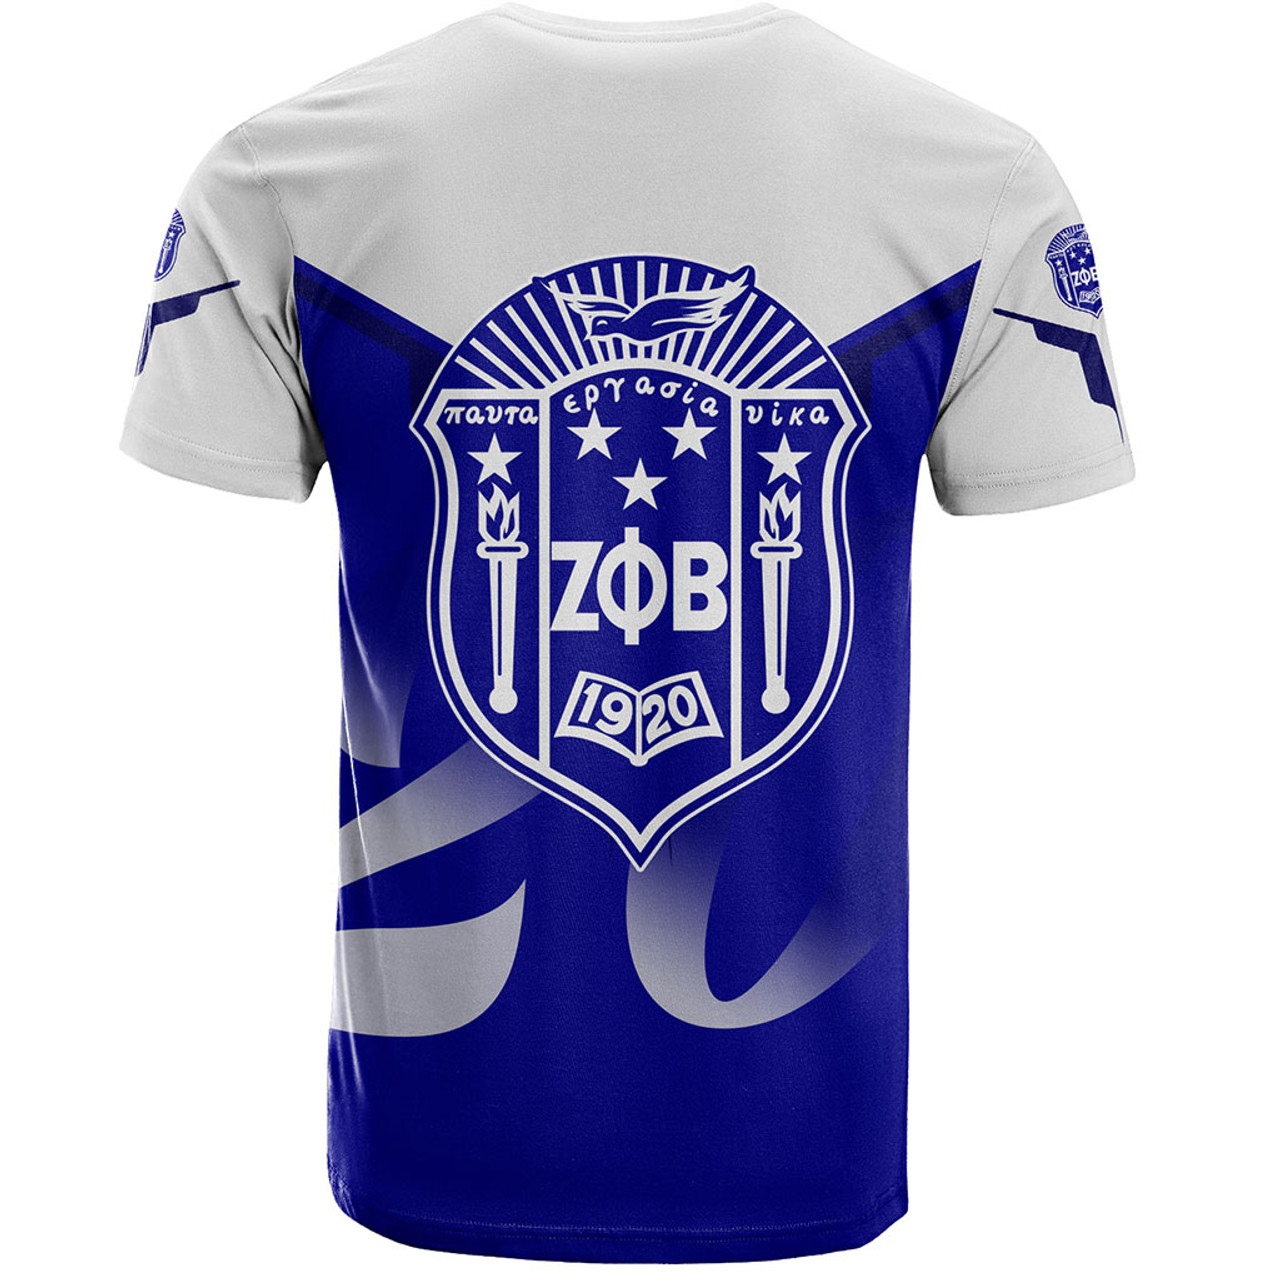 Zeta Phi Beta T-Shirt Dringking Style